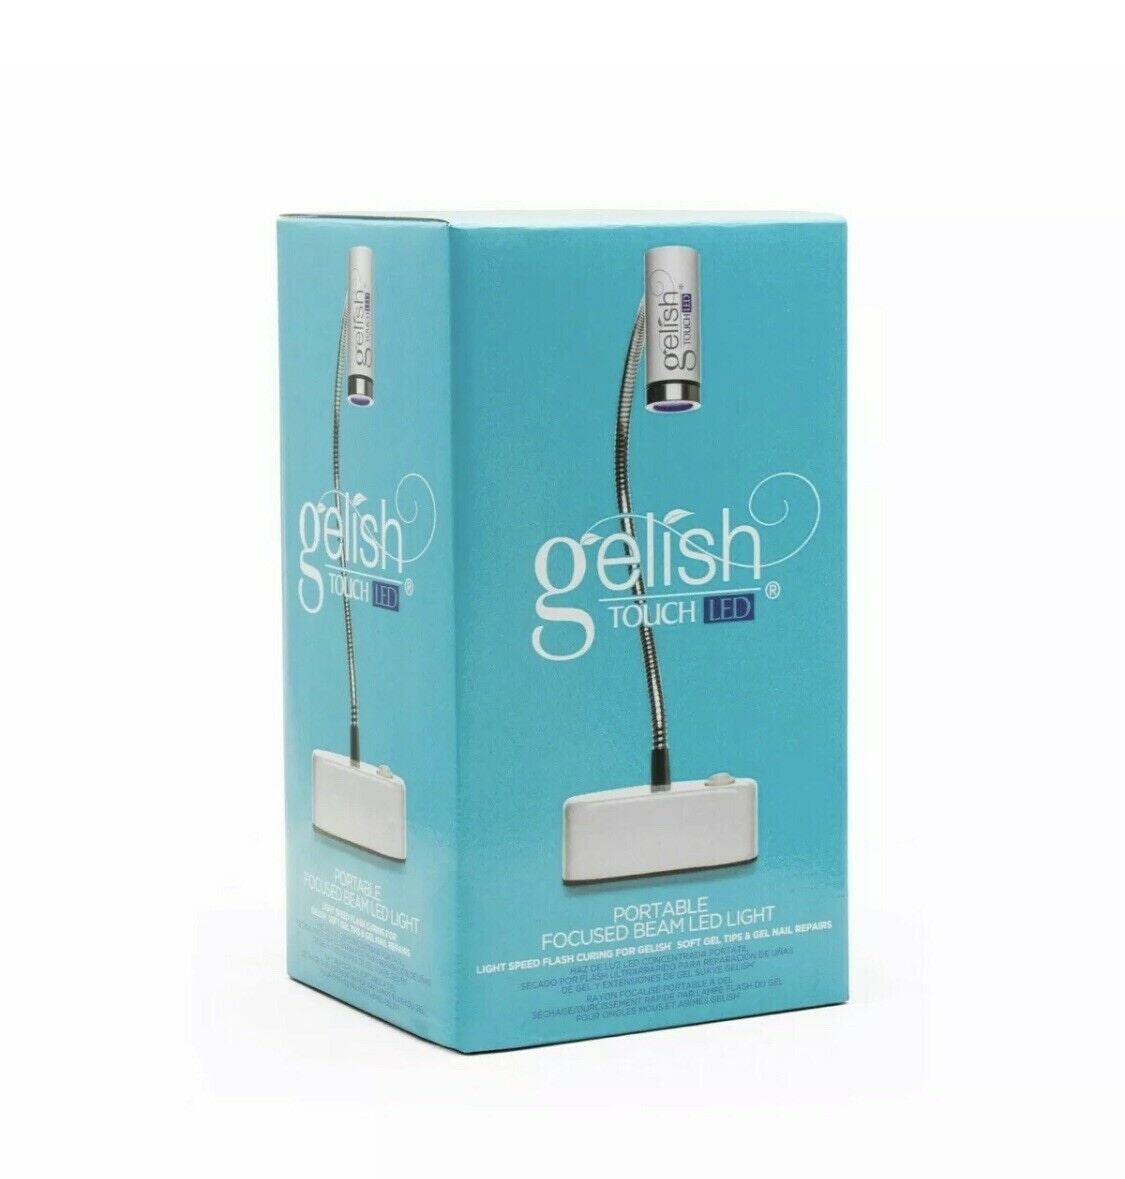 Gelish Touch LED Portable Focused Beam LED Light